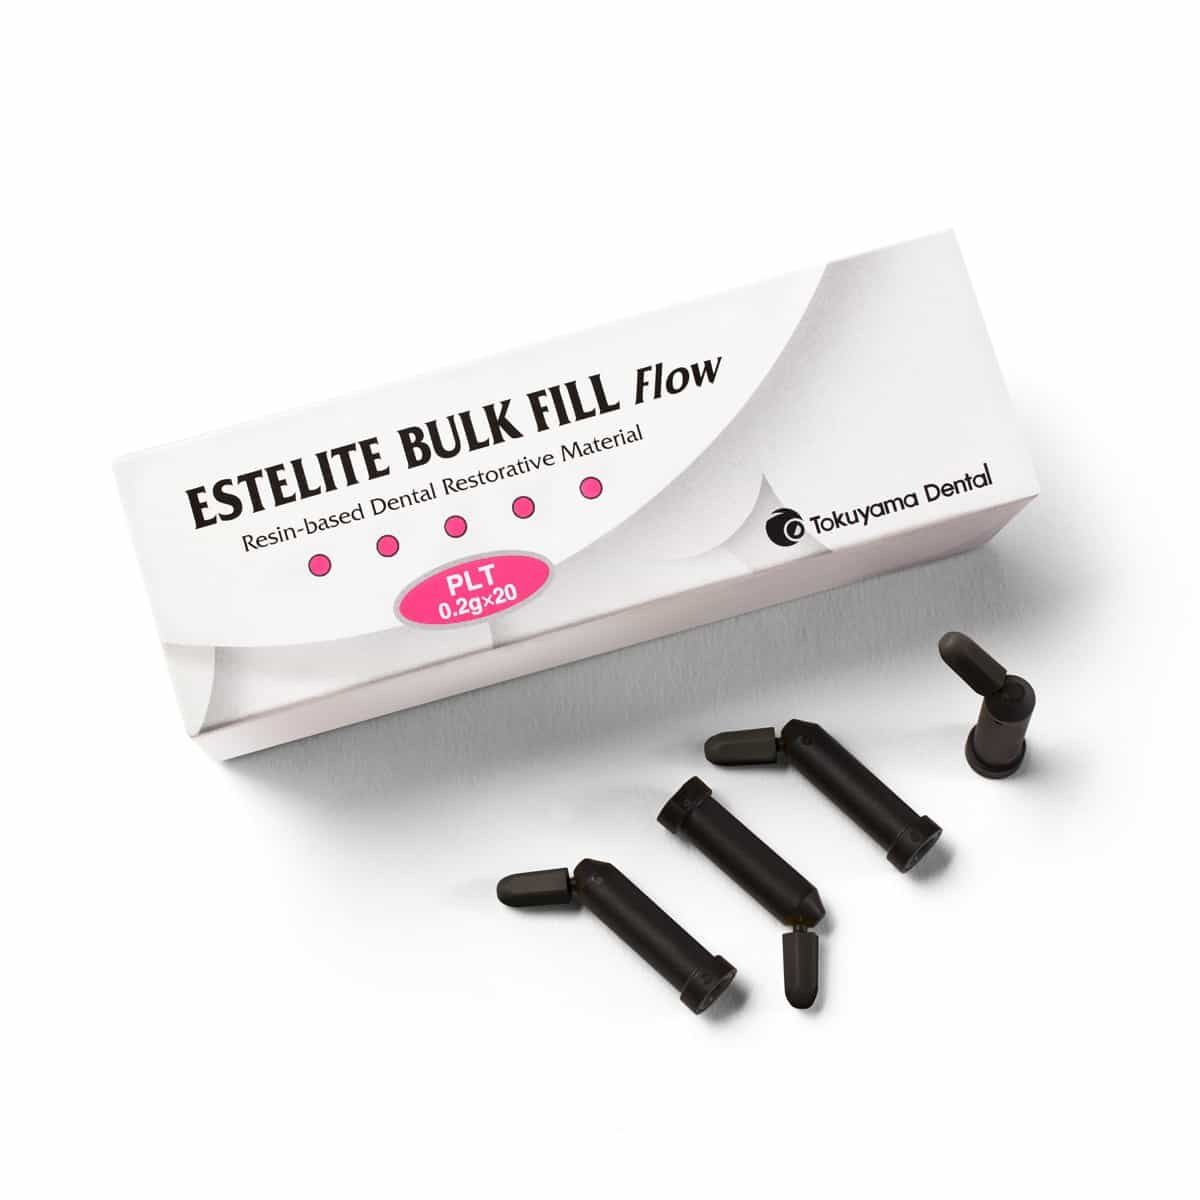 Эстелайт BULK FILL Flow шприц B1, 3.0 г, Tokuyama Dental